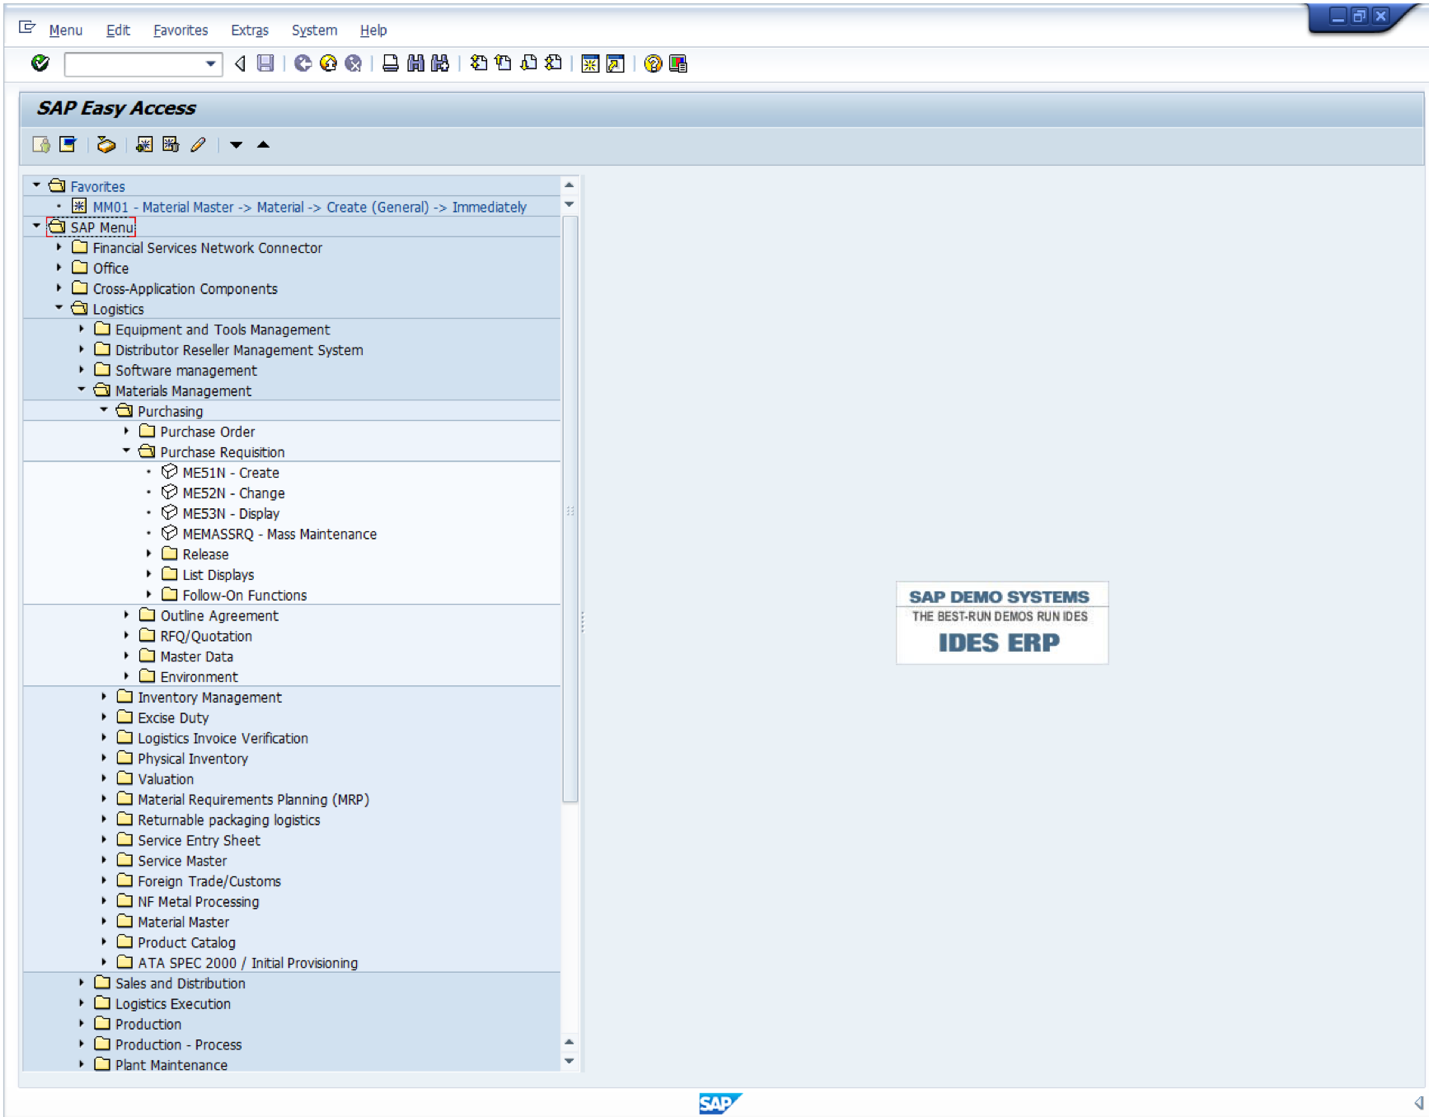 Find ME51N Transaction in SAP Menu Tree